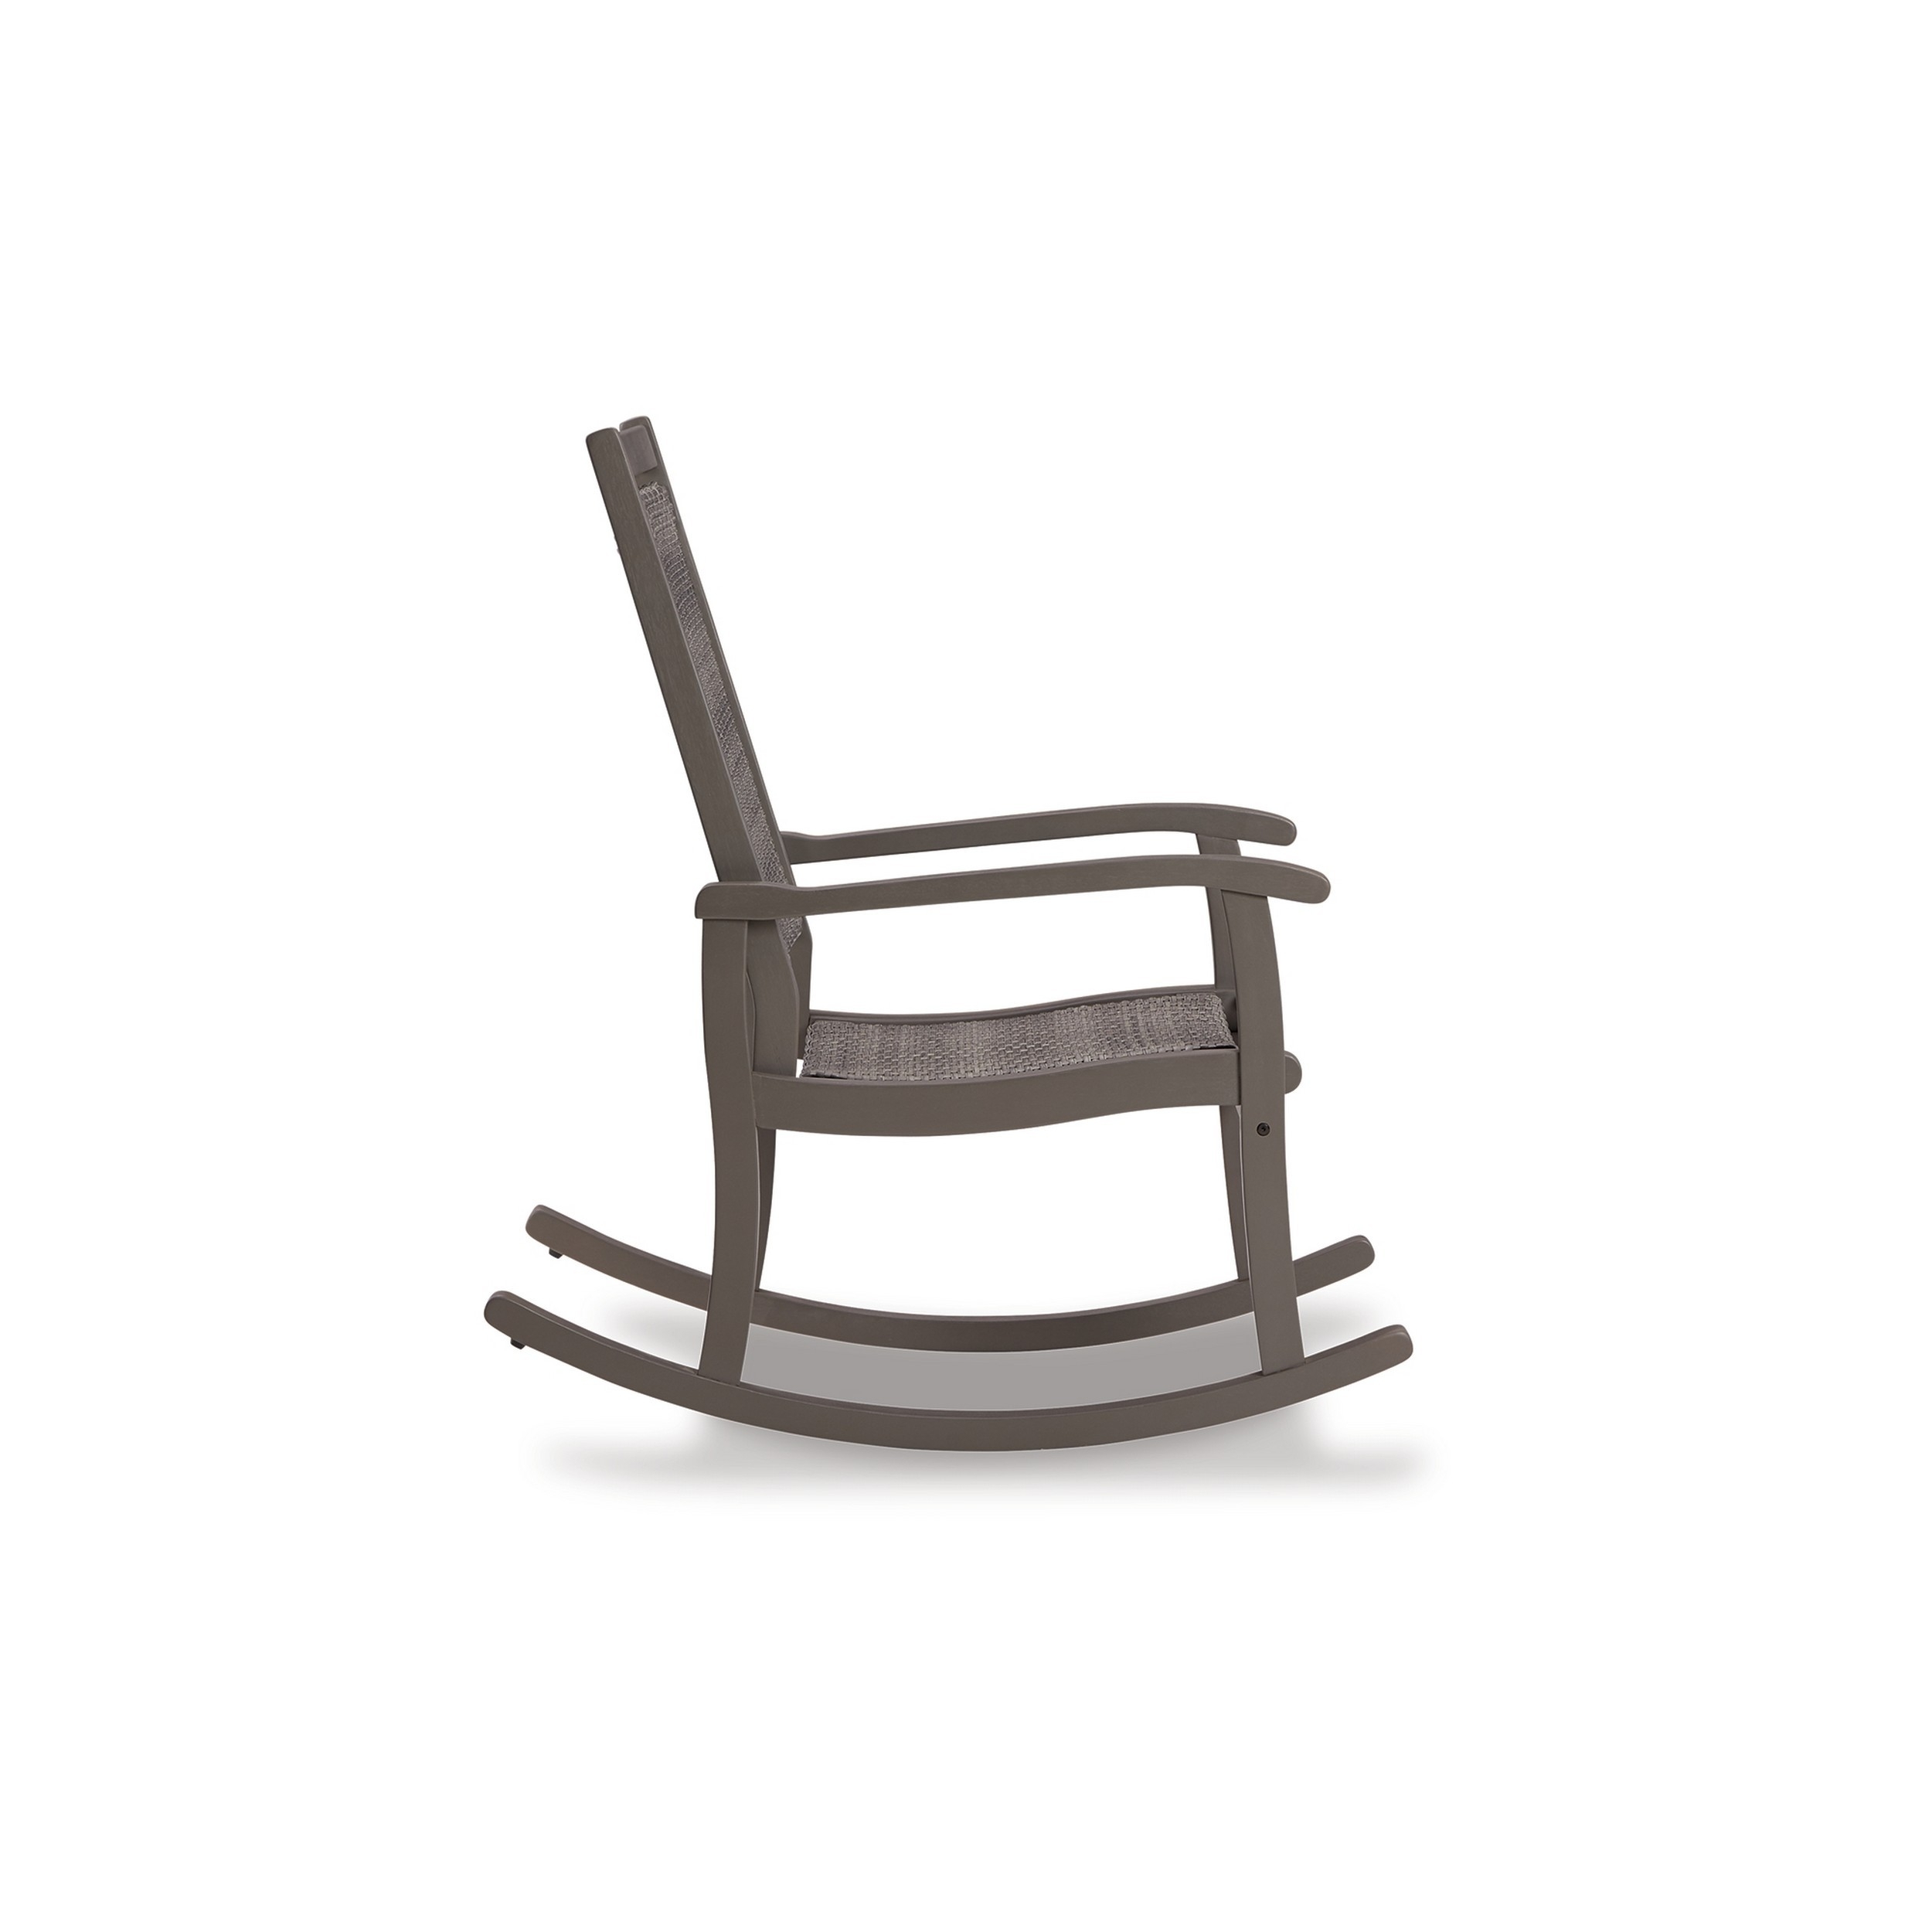 Emin 38 Inch Rocking Chair, Outdoor Resin Wicker Seat, Gray Wood Frame - Saltoro Sherpi